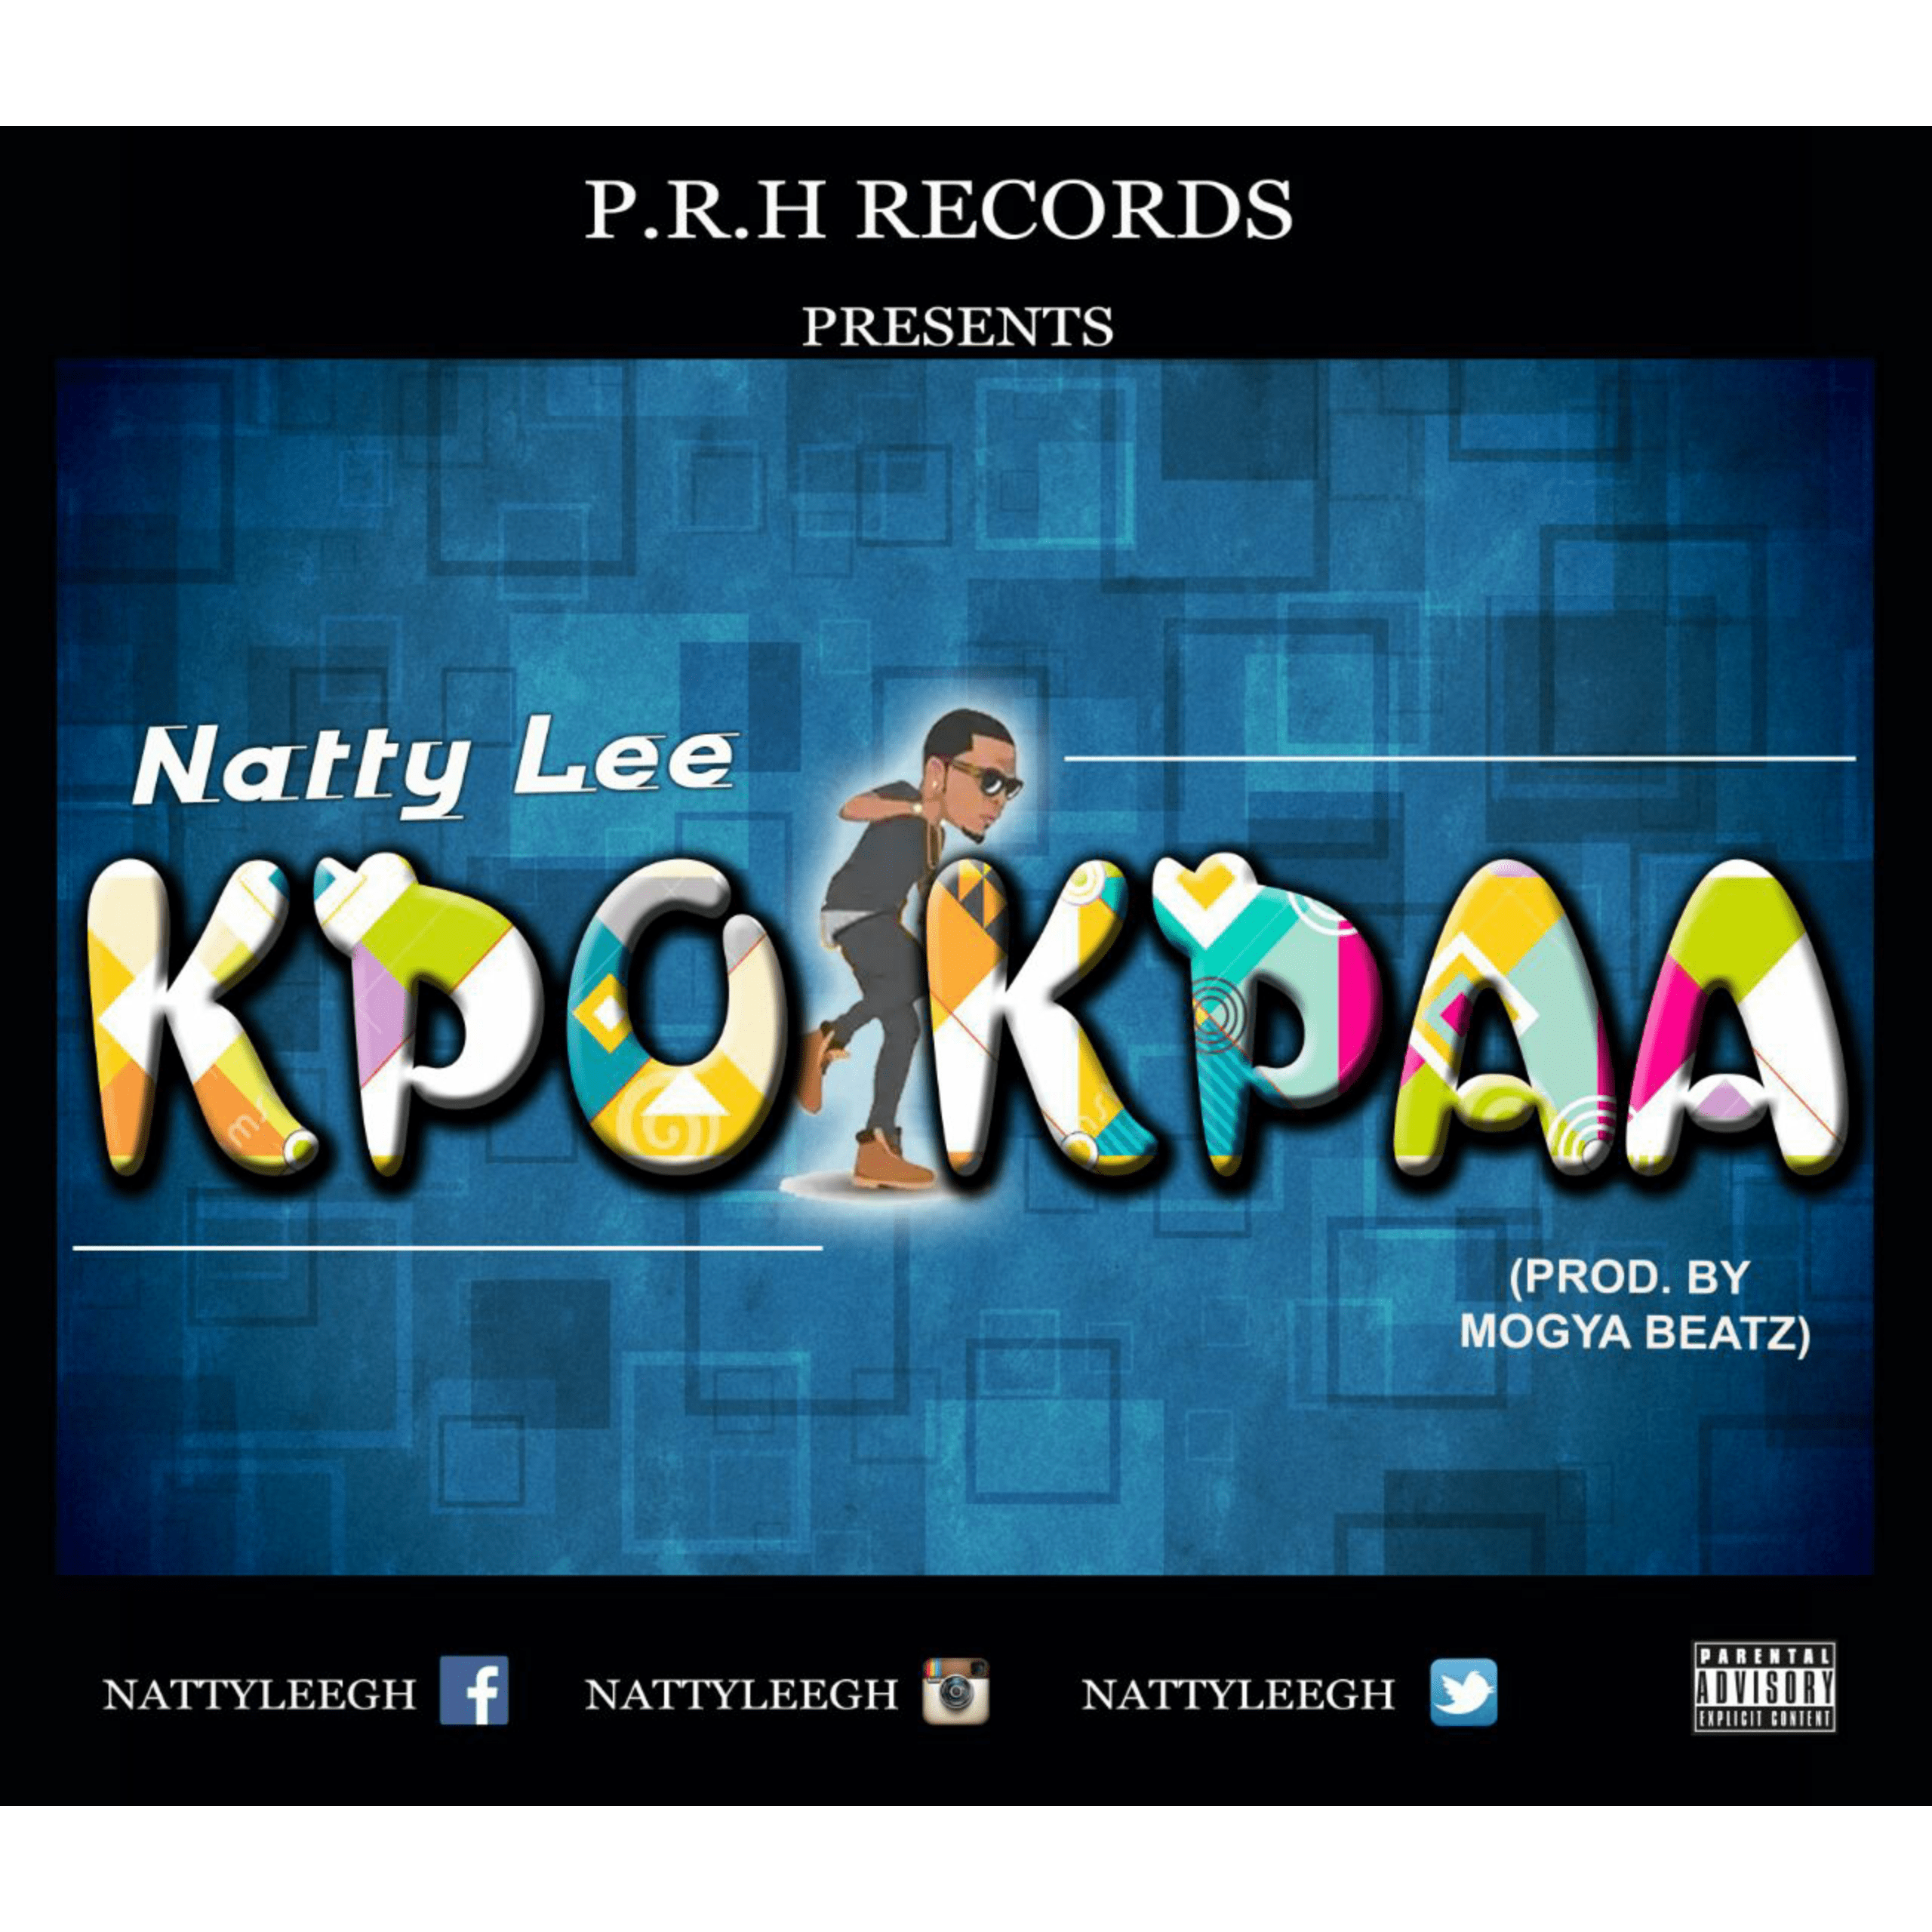 Natty Lee – kpokpaa (Prod by Mogya Beatz)